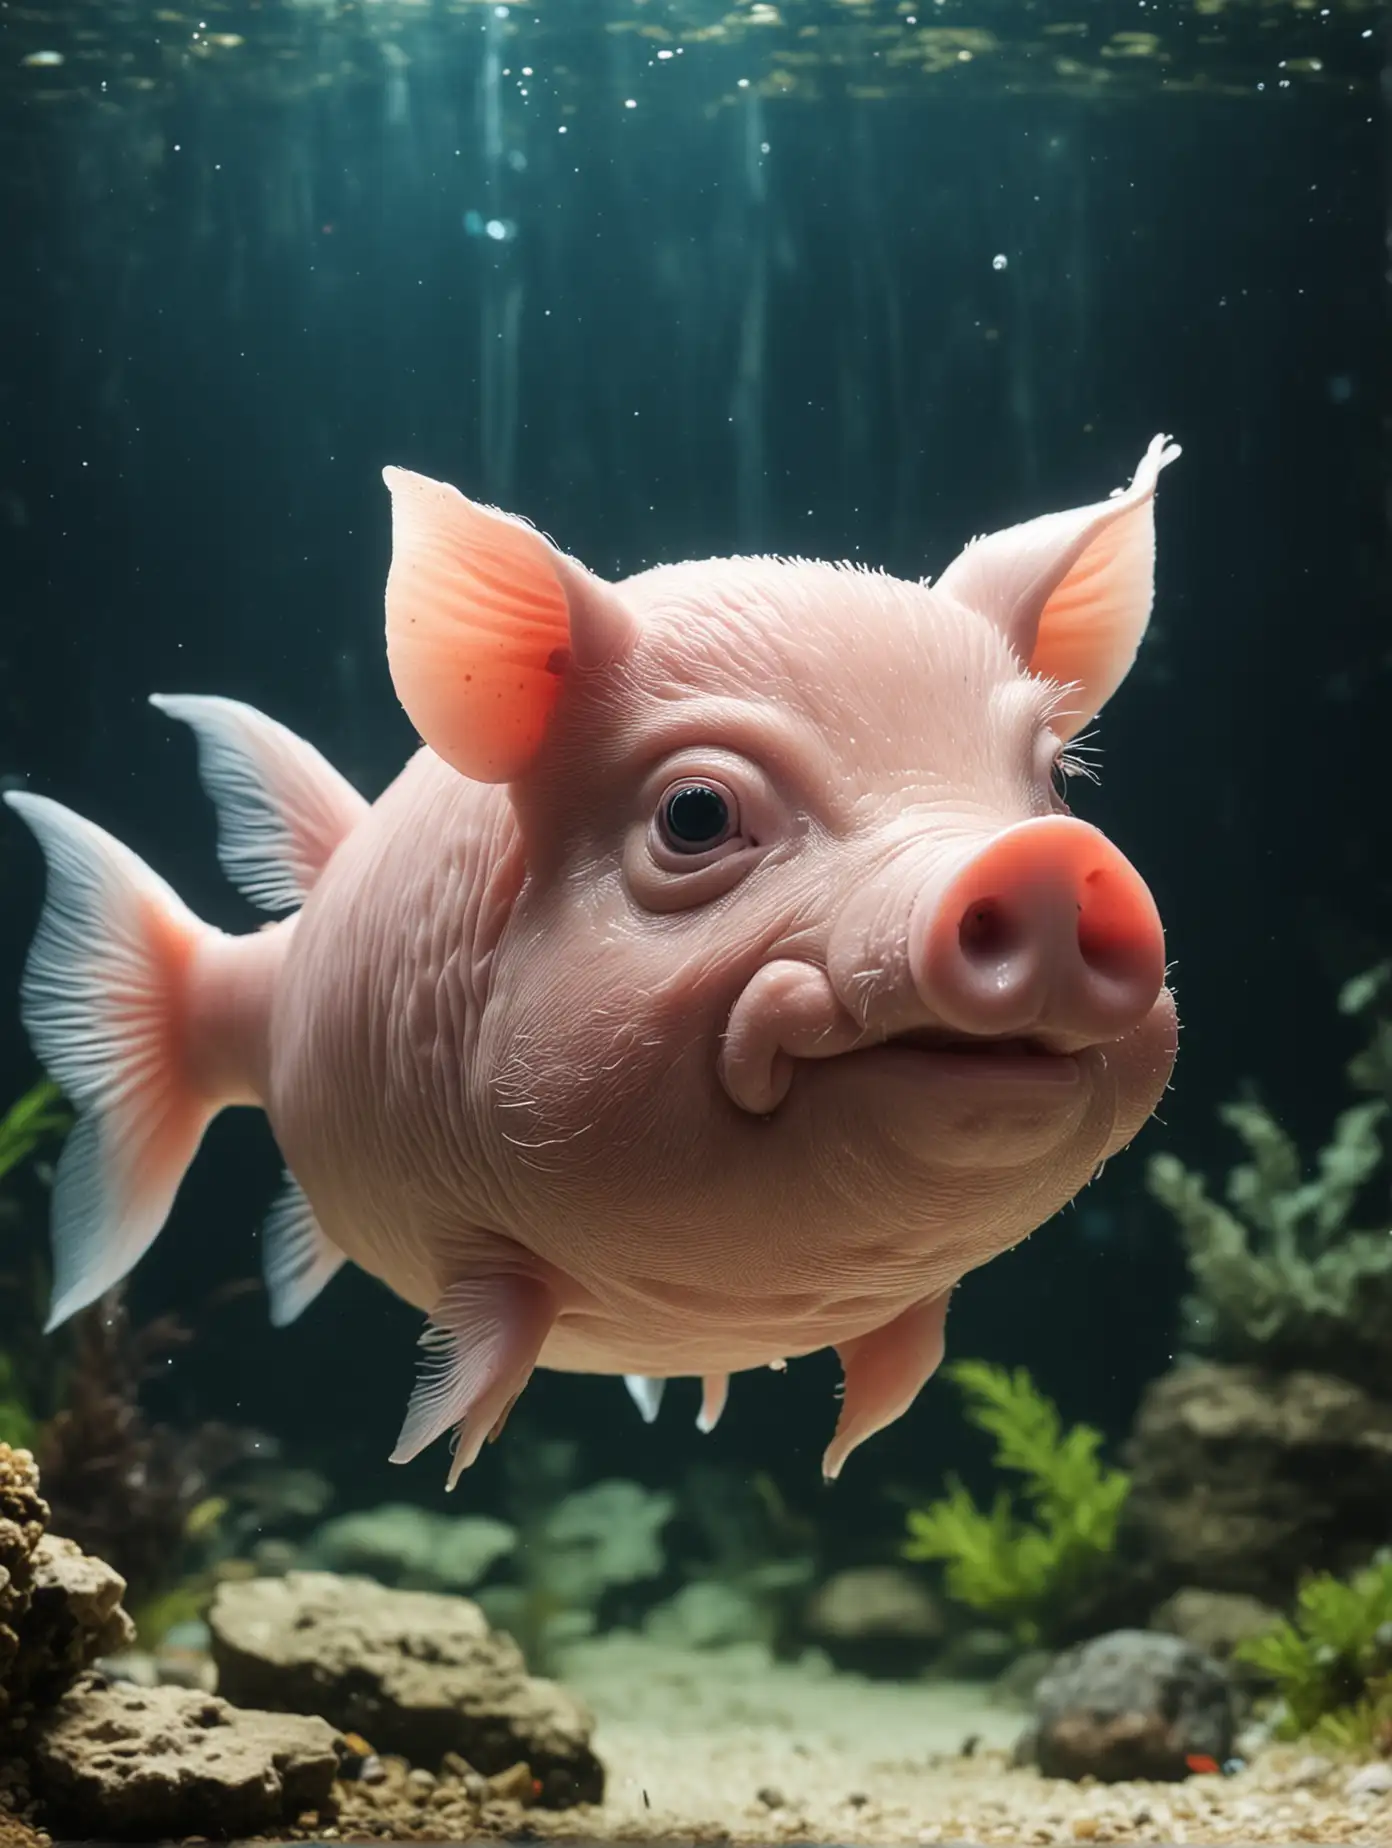 Aquarium Scene with PigShaped Fish in Long Shot